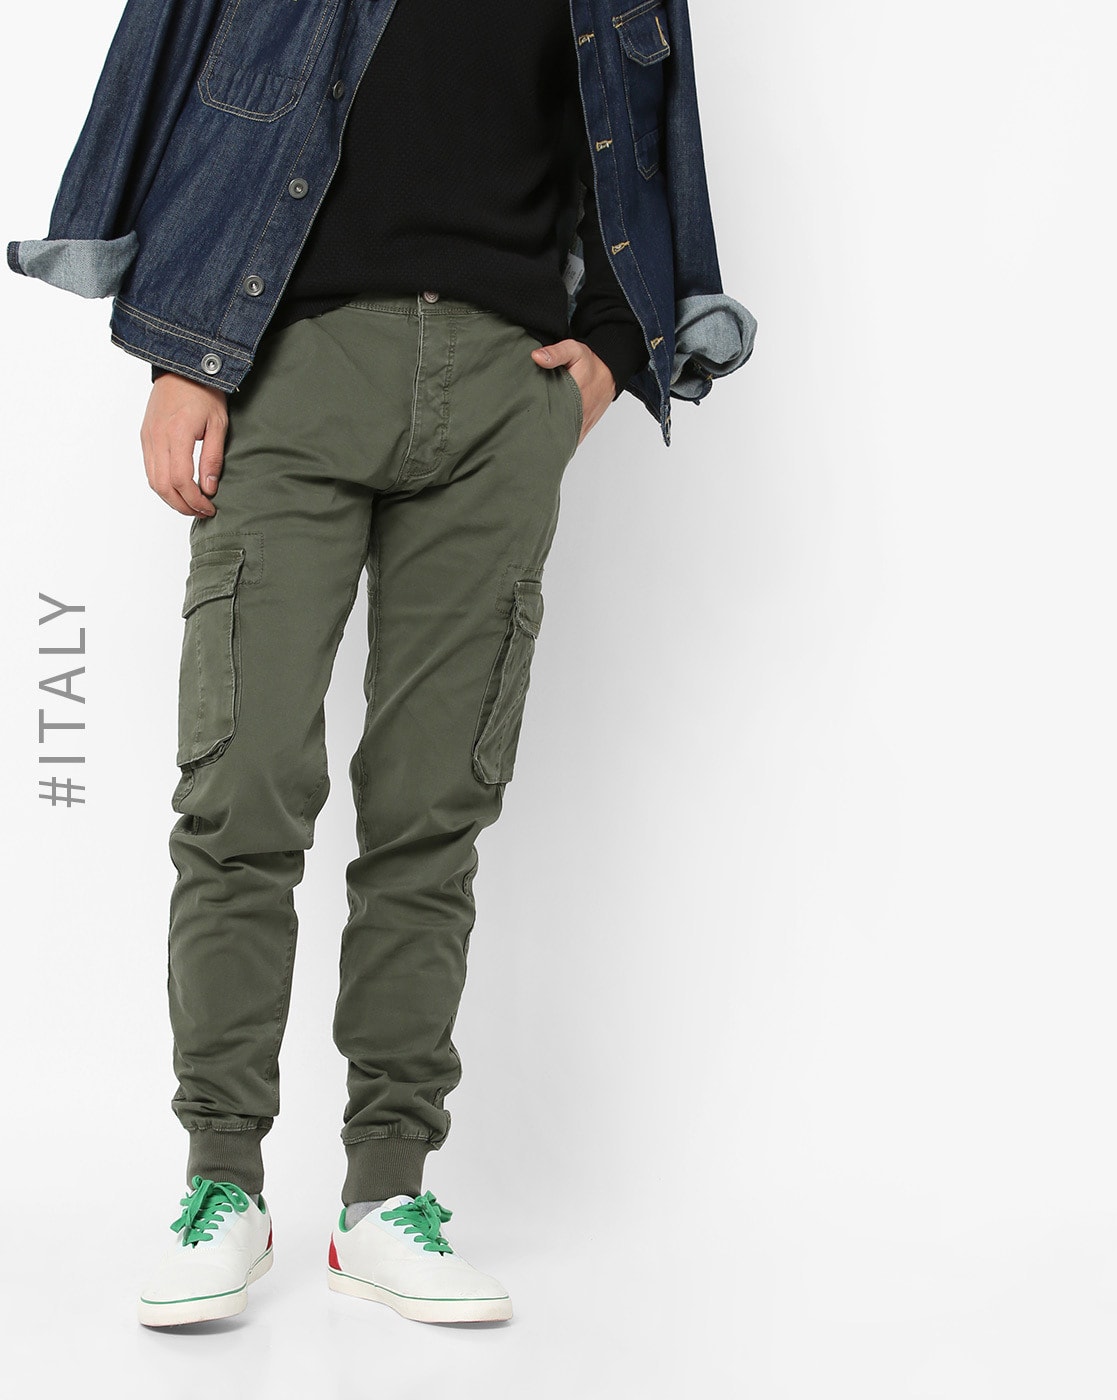 Buy Green Pants for Women by Seasons Online | Ajio.com